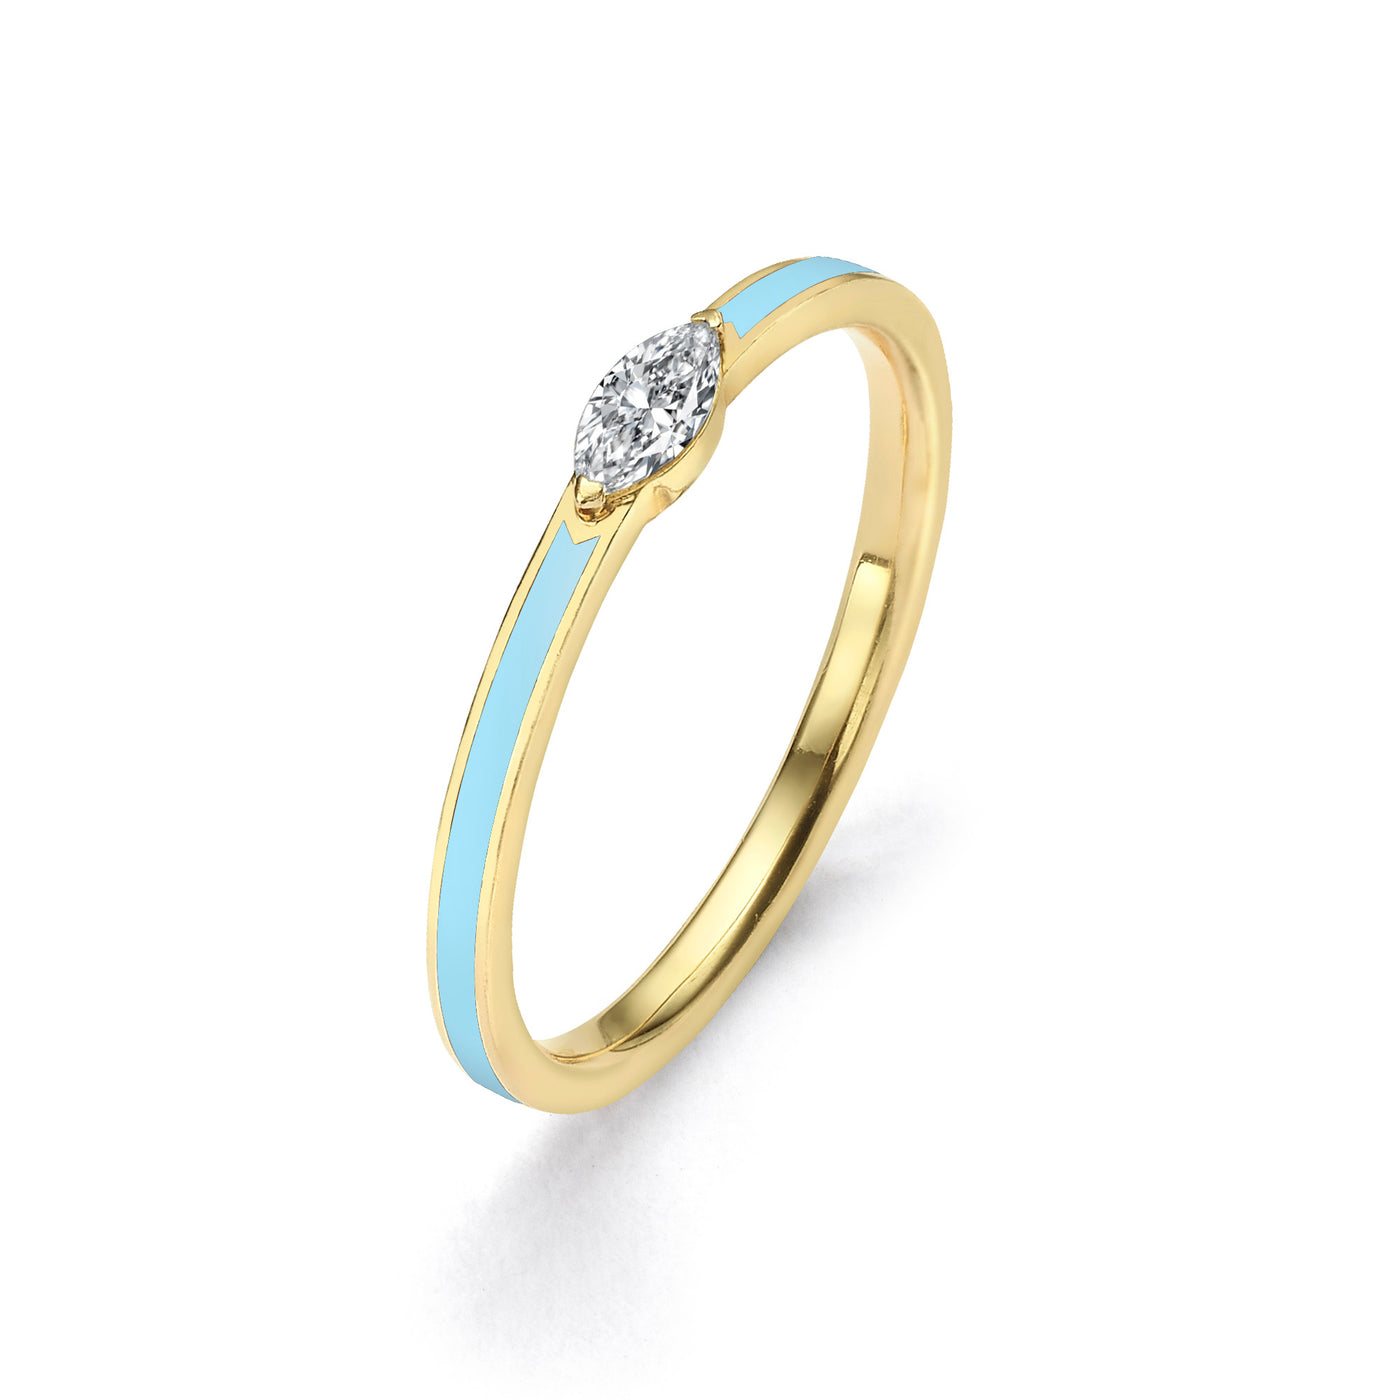 Enamel marquise ring- light blue